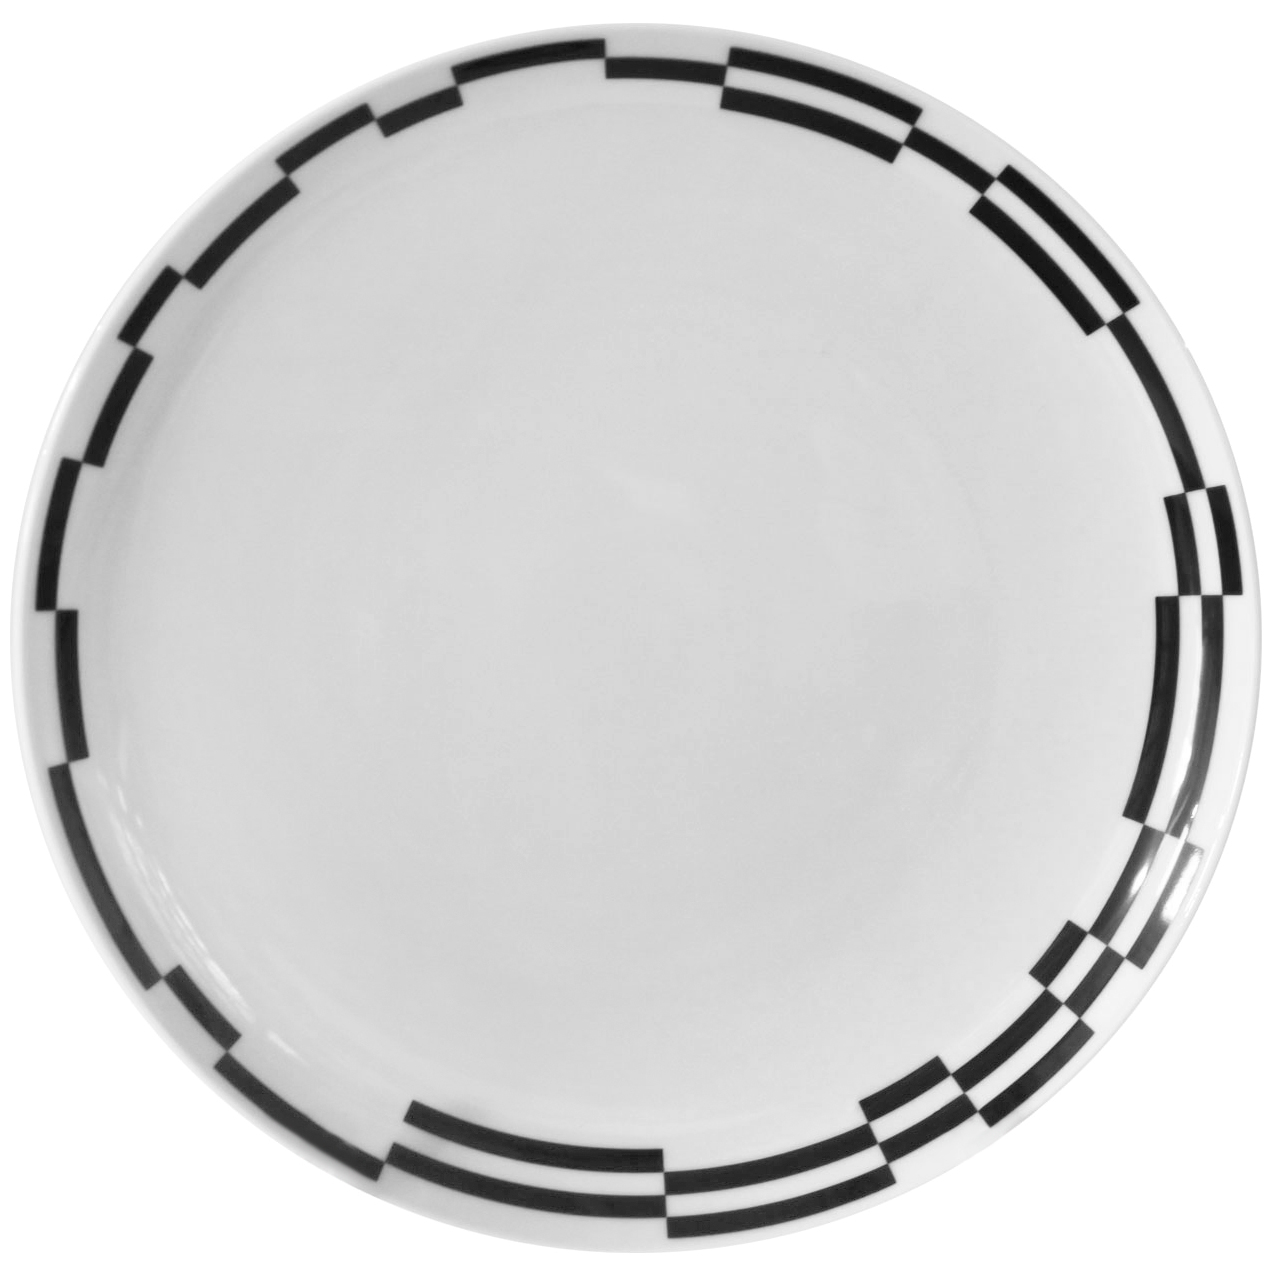 Тарелка мелкая Thun Tom Черно-белые полоски 26 см тарелка мелкая thun cairo подсолнухи 25 см